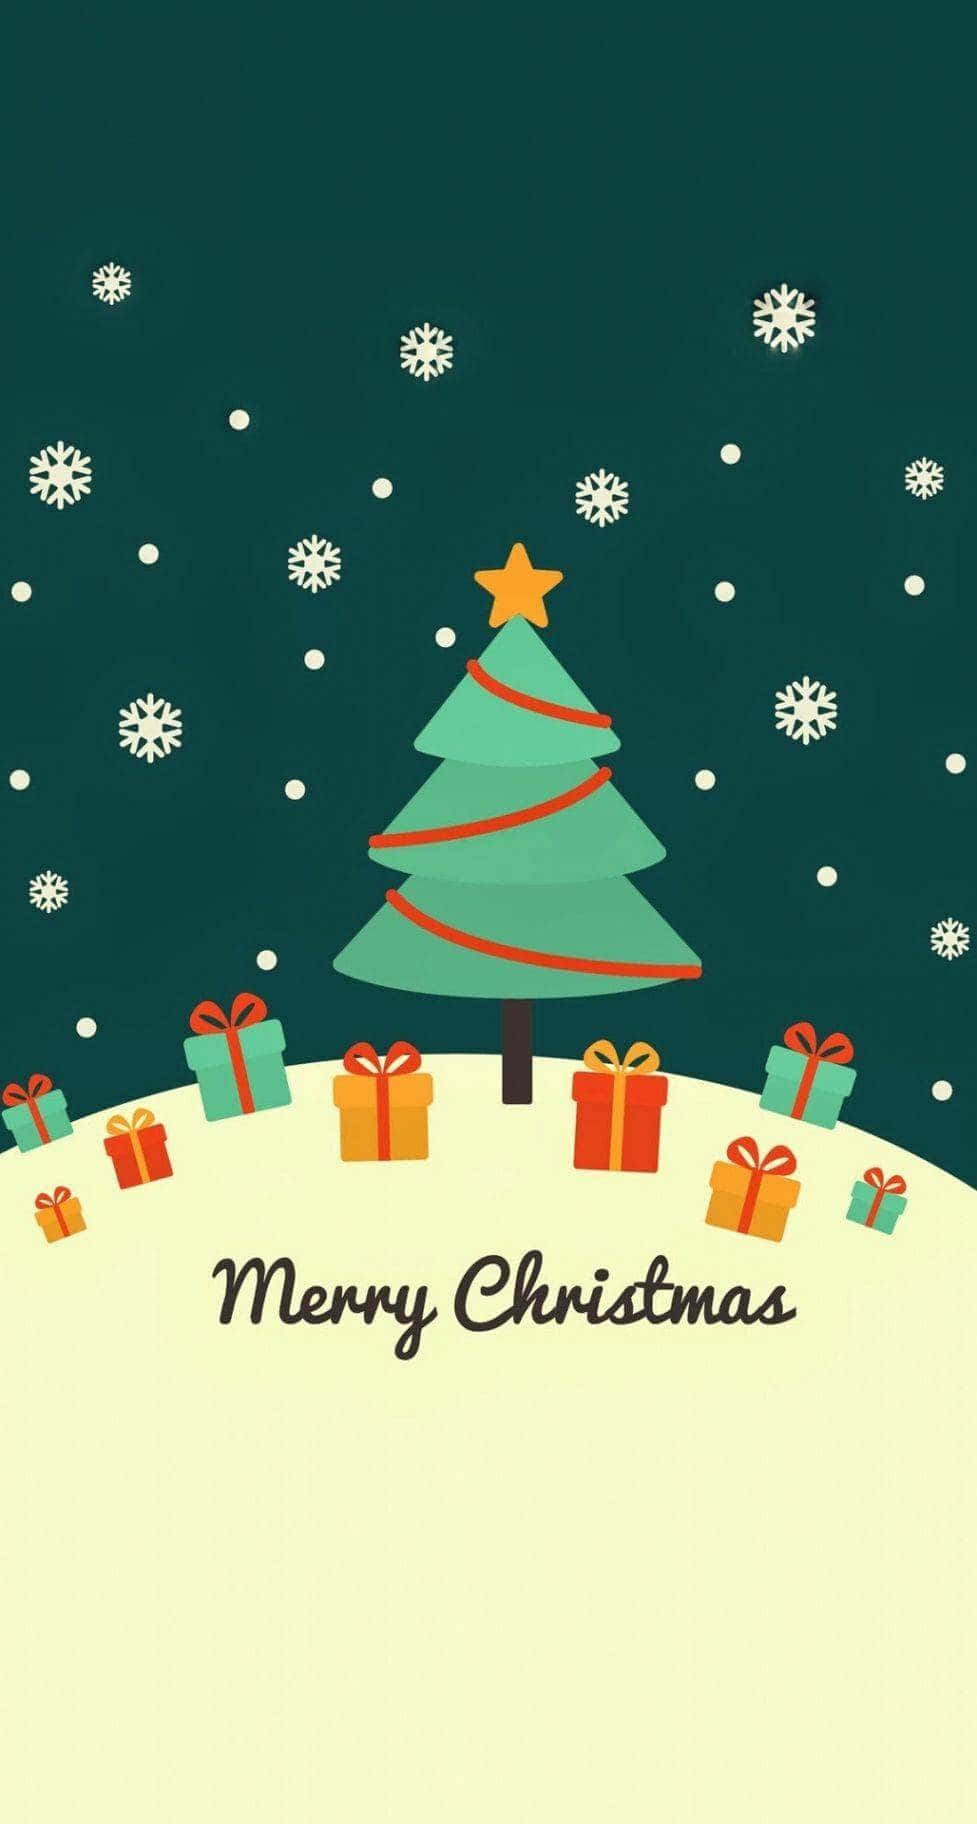 Christmas Tree Snowflakes Greeting Design Wallpaper